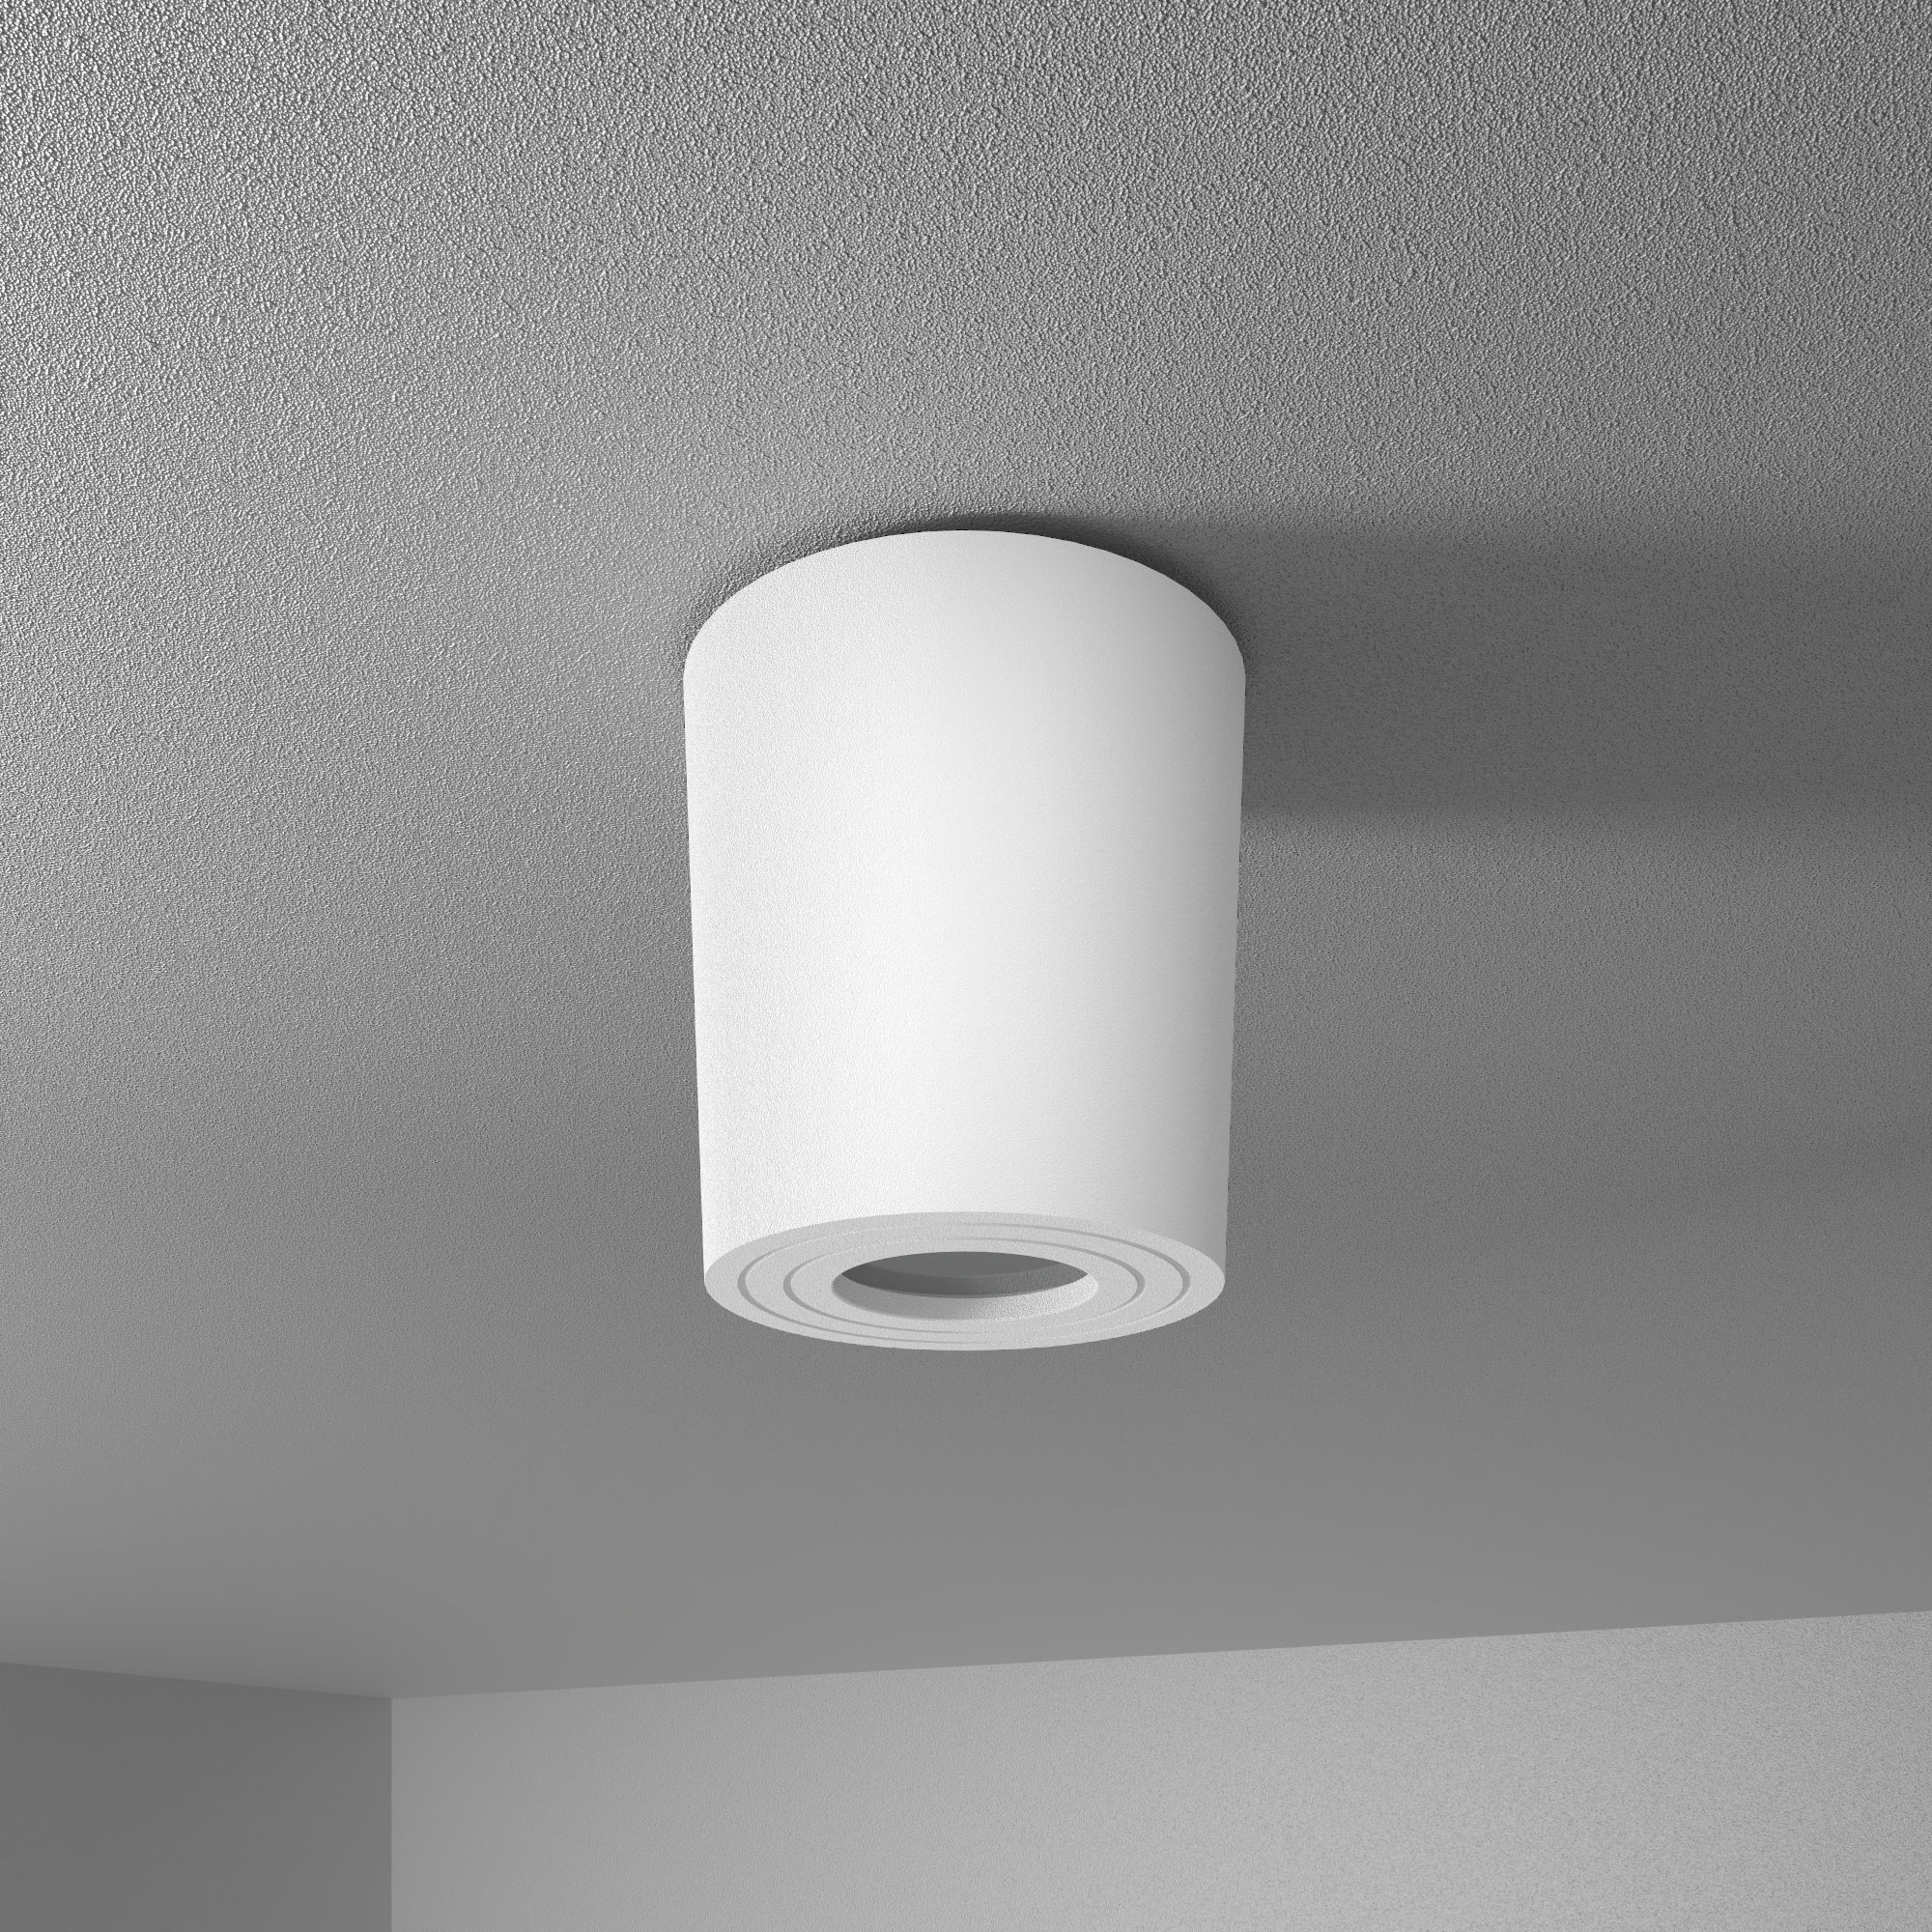 HOFTRONIC™ Paxton - LED plafondspot opbouw - Rond - Wit - Aluminium - IP65 geschikt voor badkamer en keuken - GU10 fitting - 3 jaar garantie